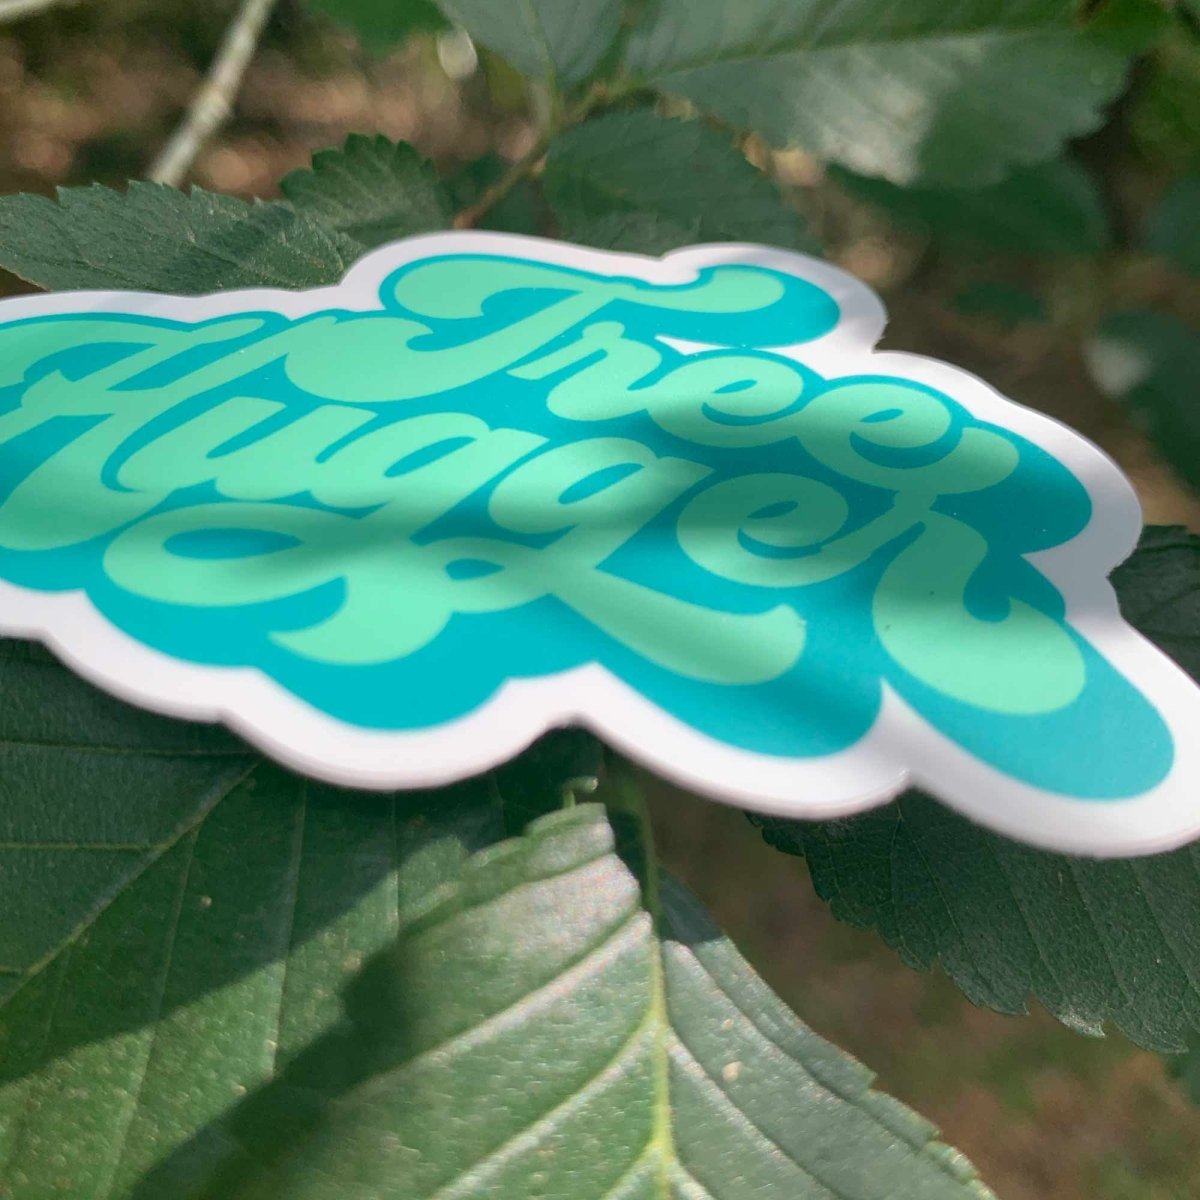 Tree Hugger - Premium Stickers